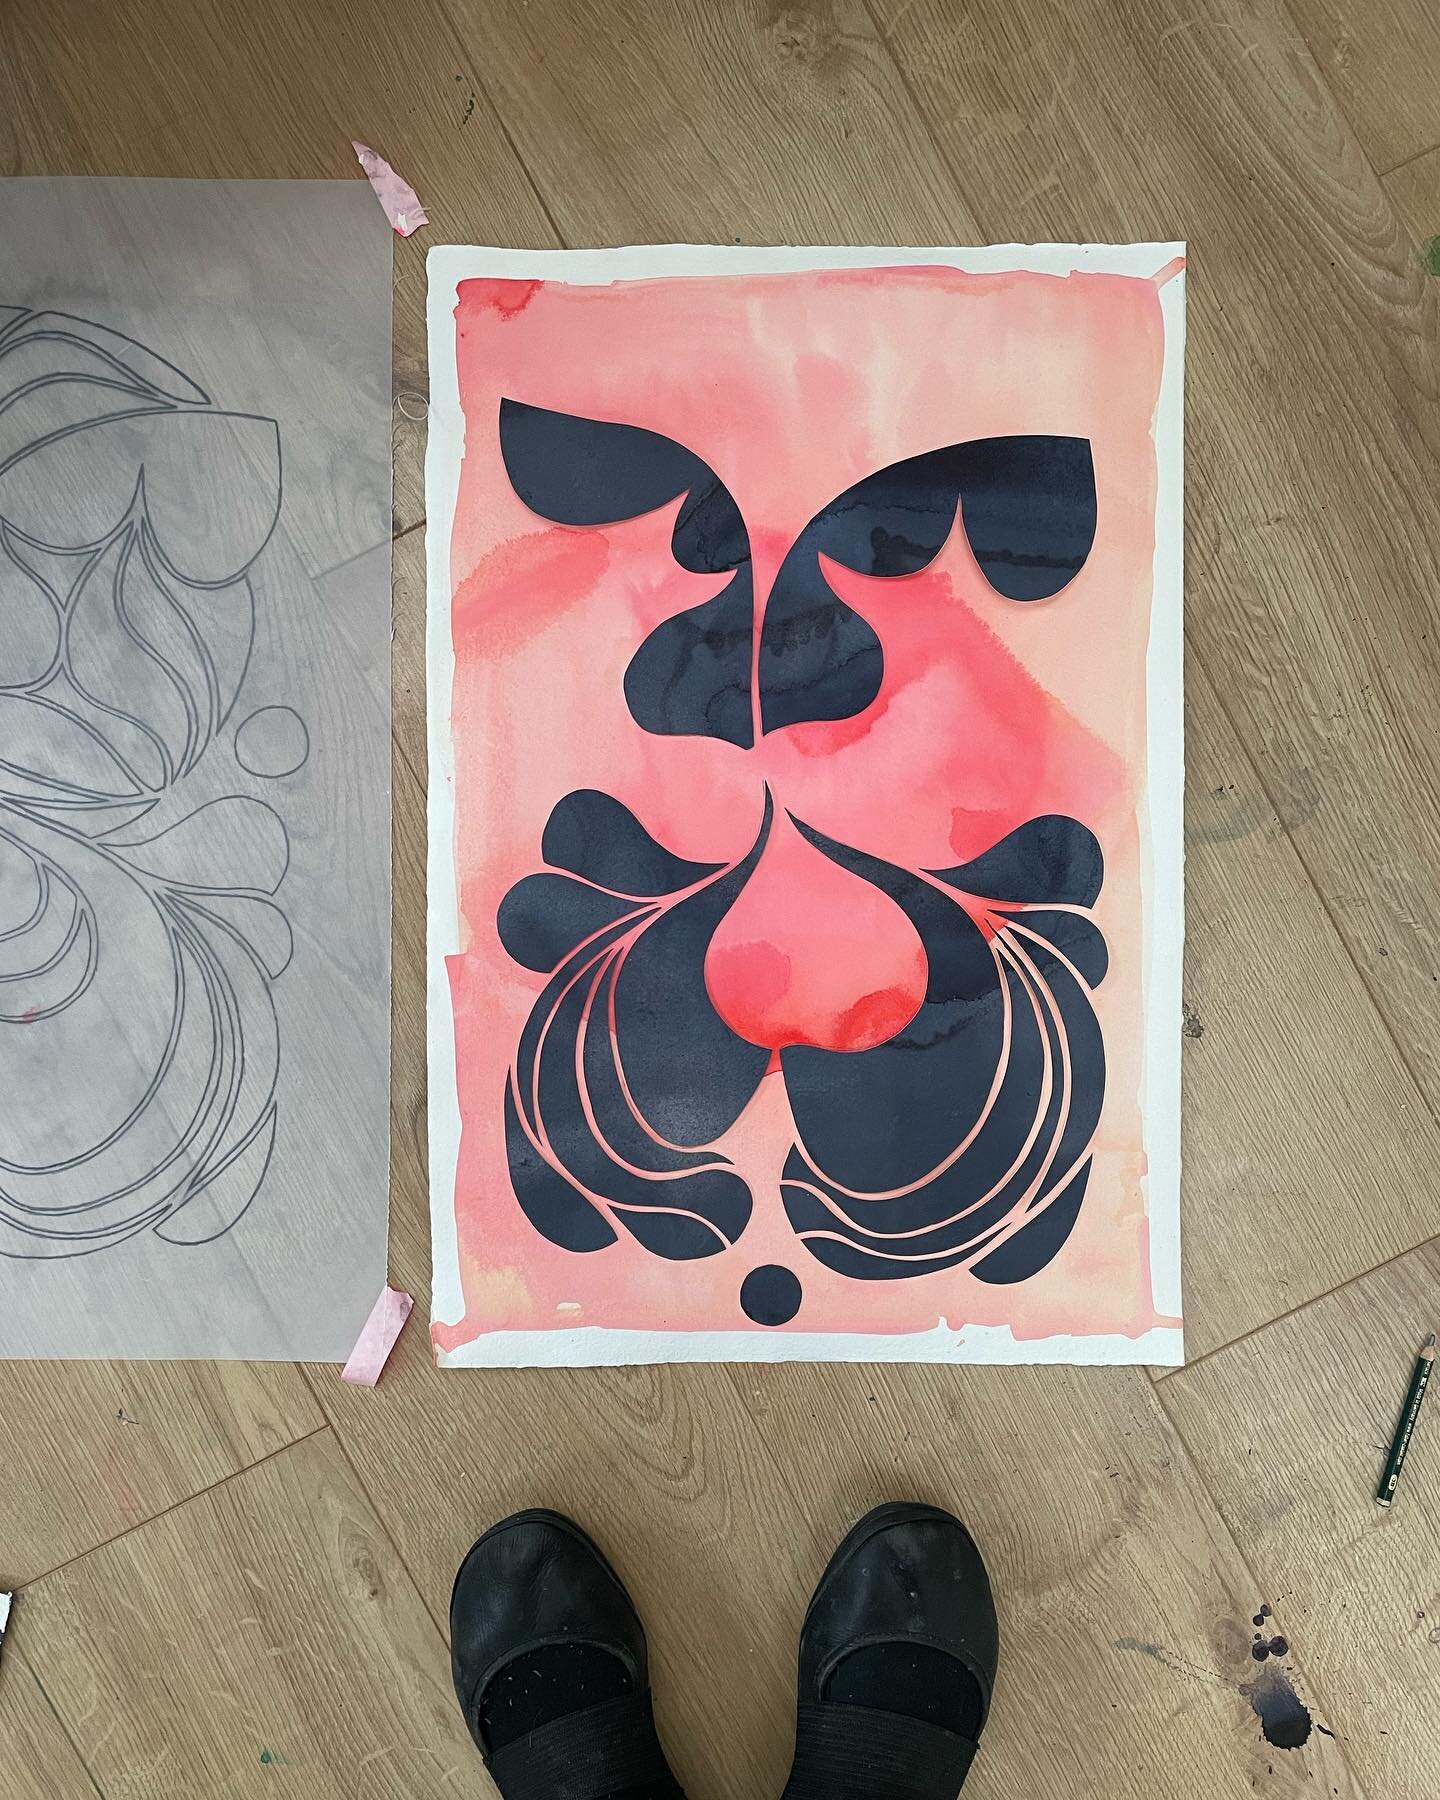 Work in progress&hellip;
I do like my feet in shots.

#feet #art #friday #happyfriday #artist #colour #paper #watercolour #mixedmedia #collage #cutout #shapes #feminine #contemporaryart #artwork #worksonpaper